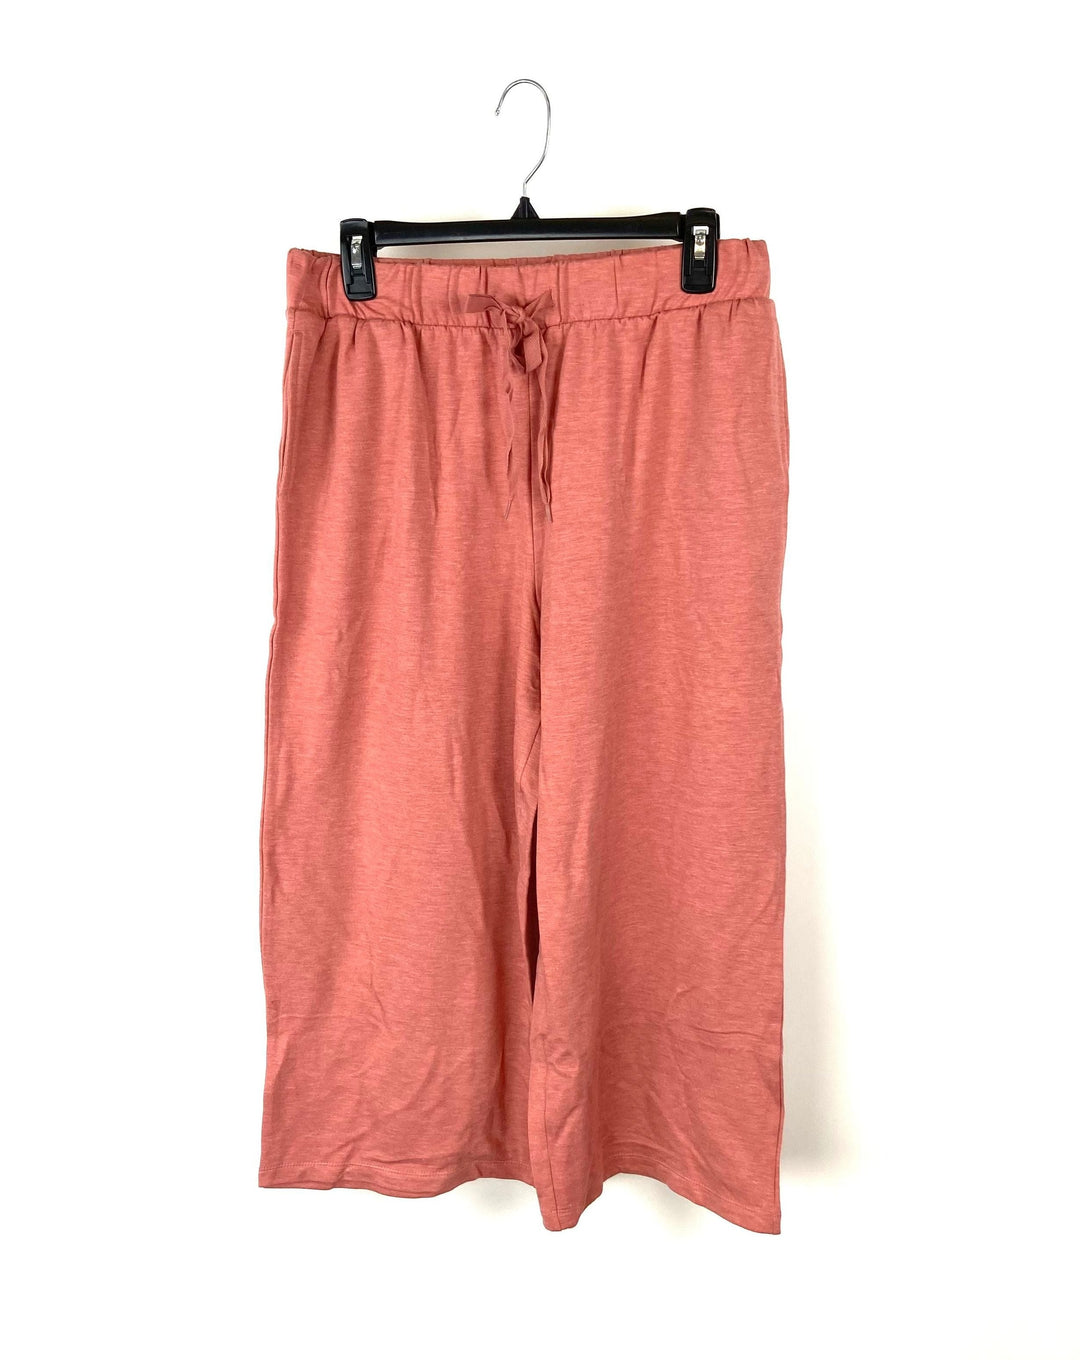 Pink Cropped Sweat Pants - Small/Medium